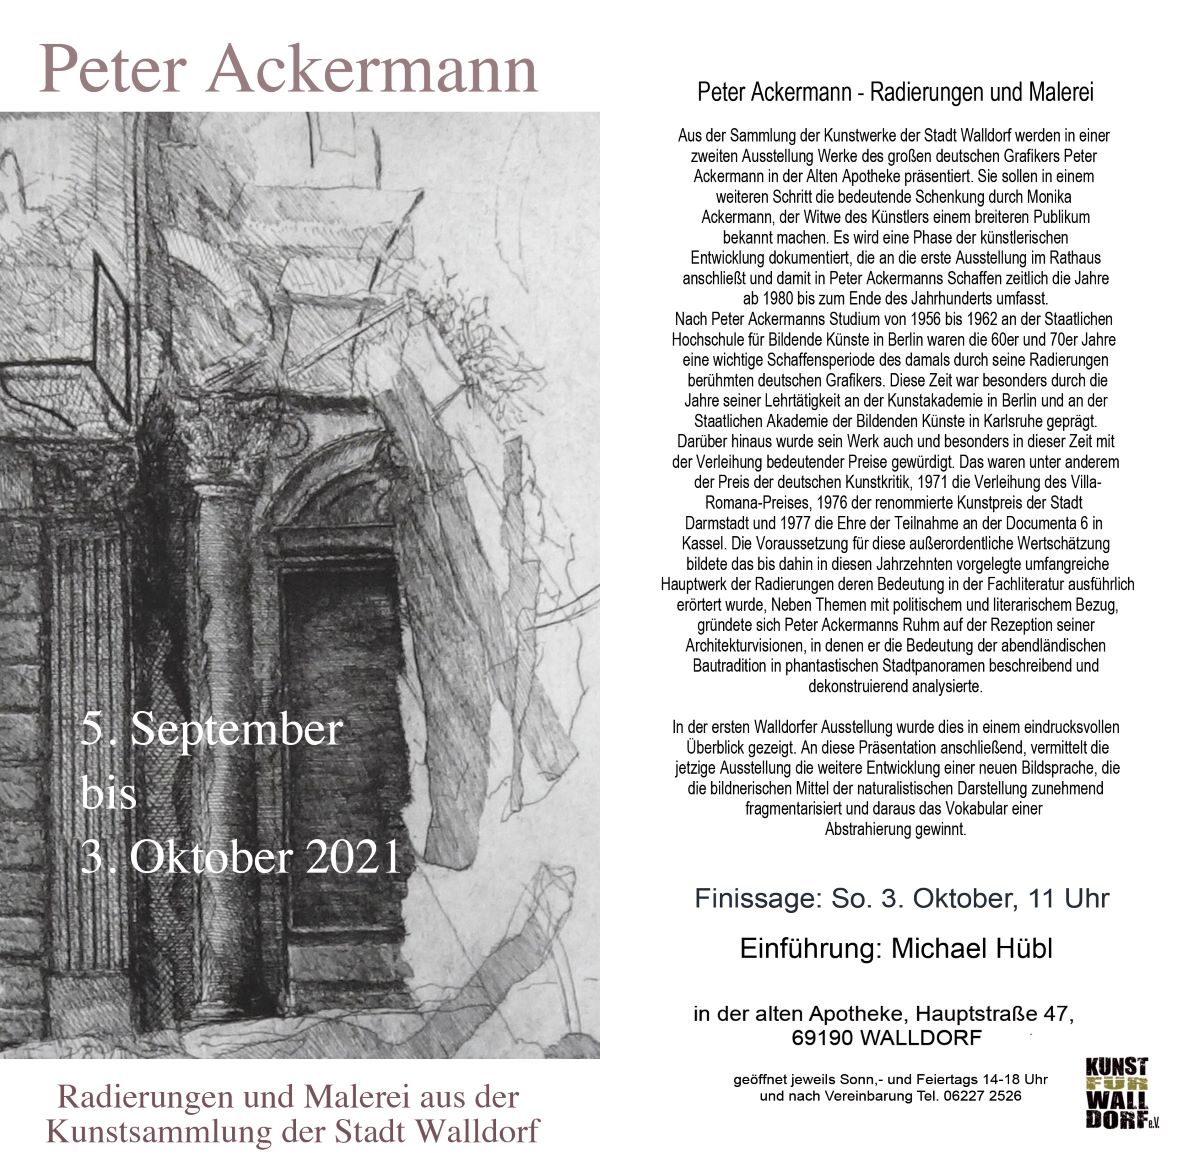 Galerie Alte Apotheke: Ausstellung des Grafikers Peter Ackermann